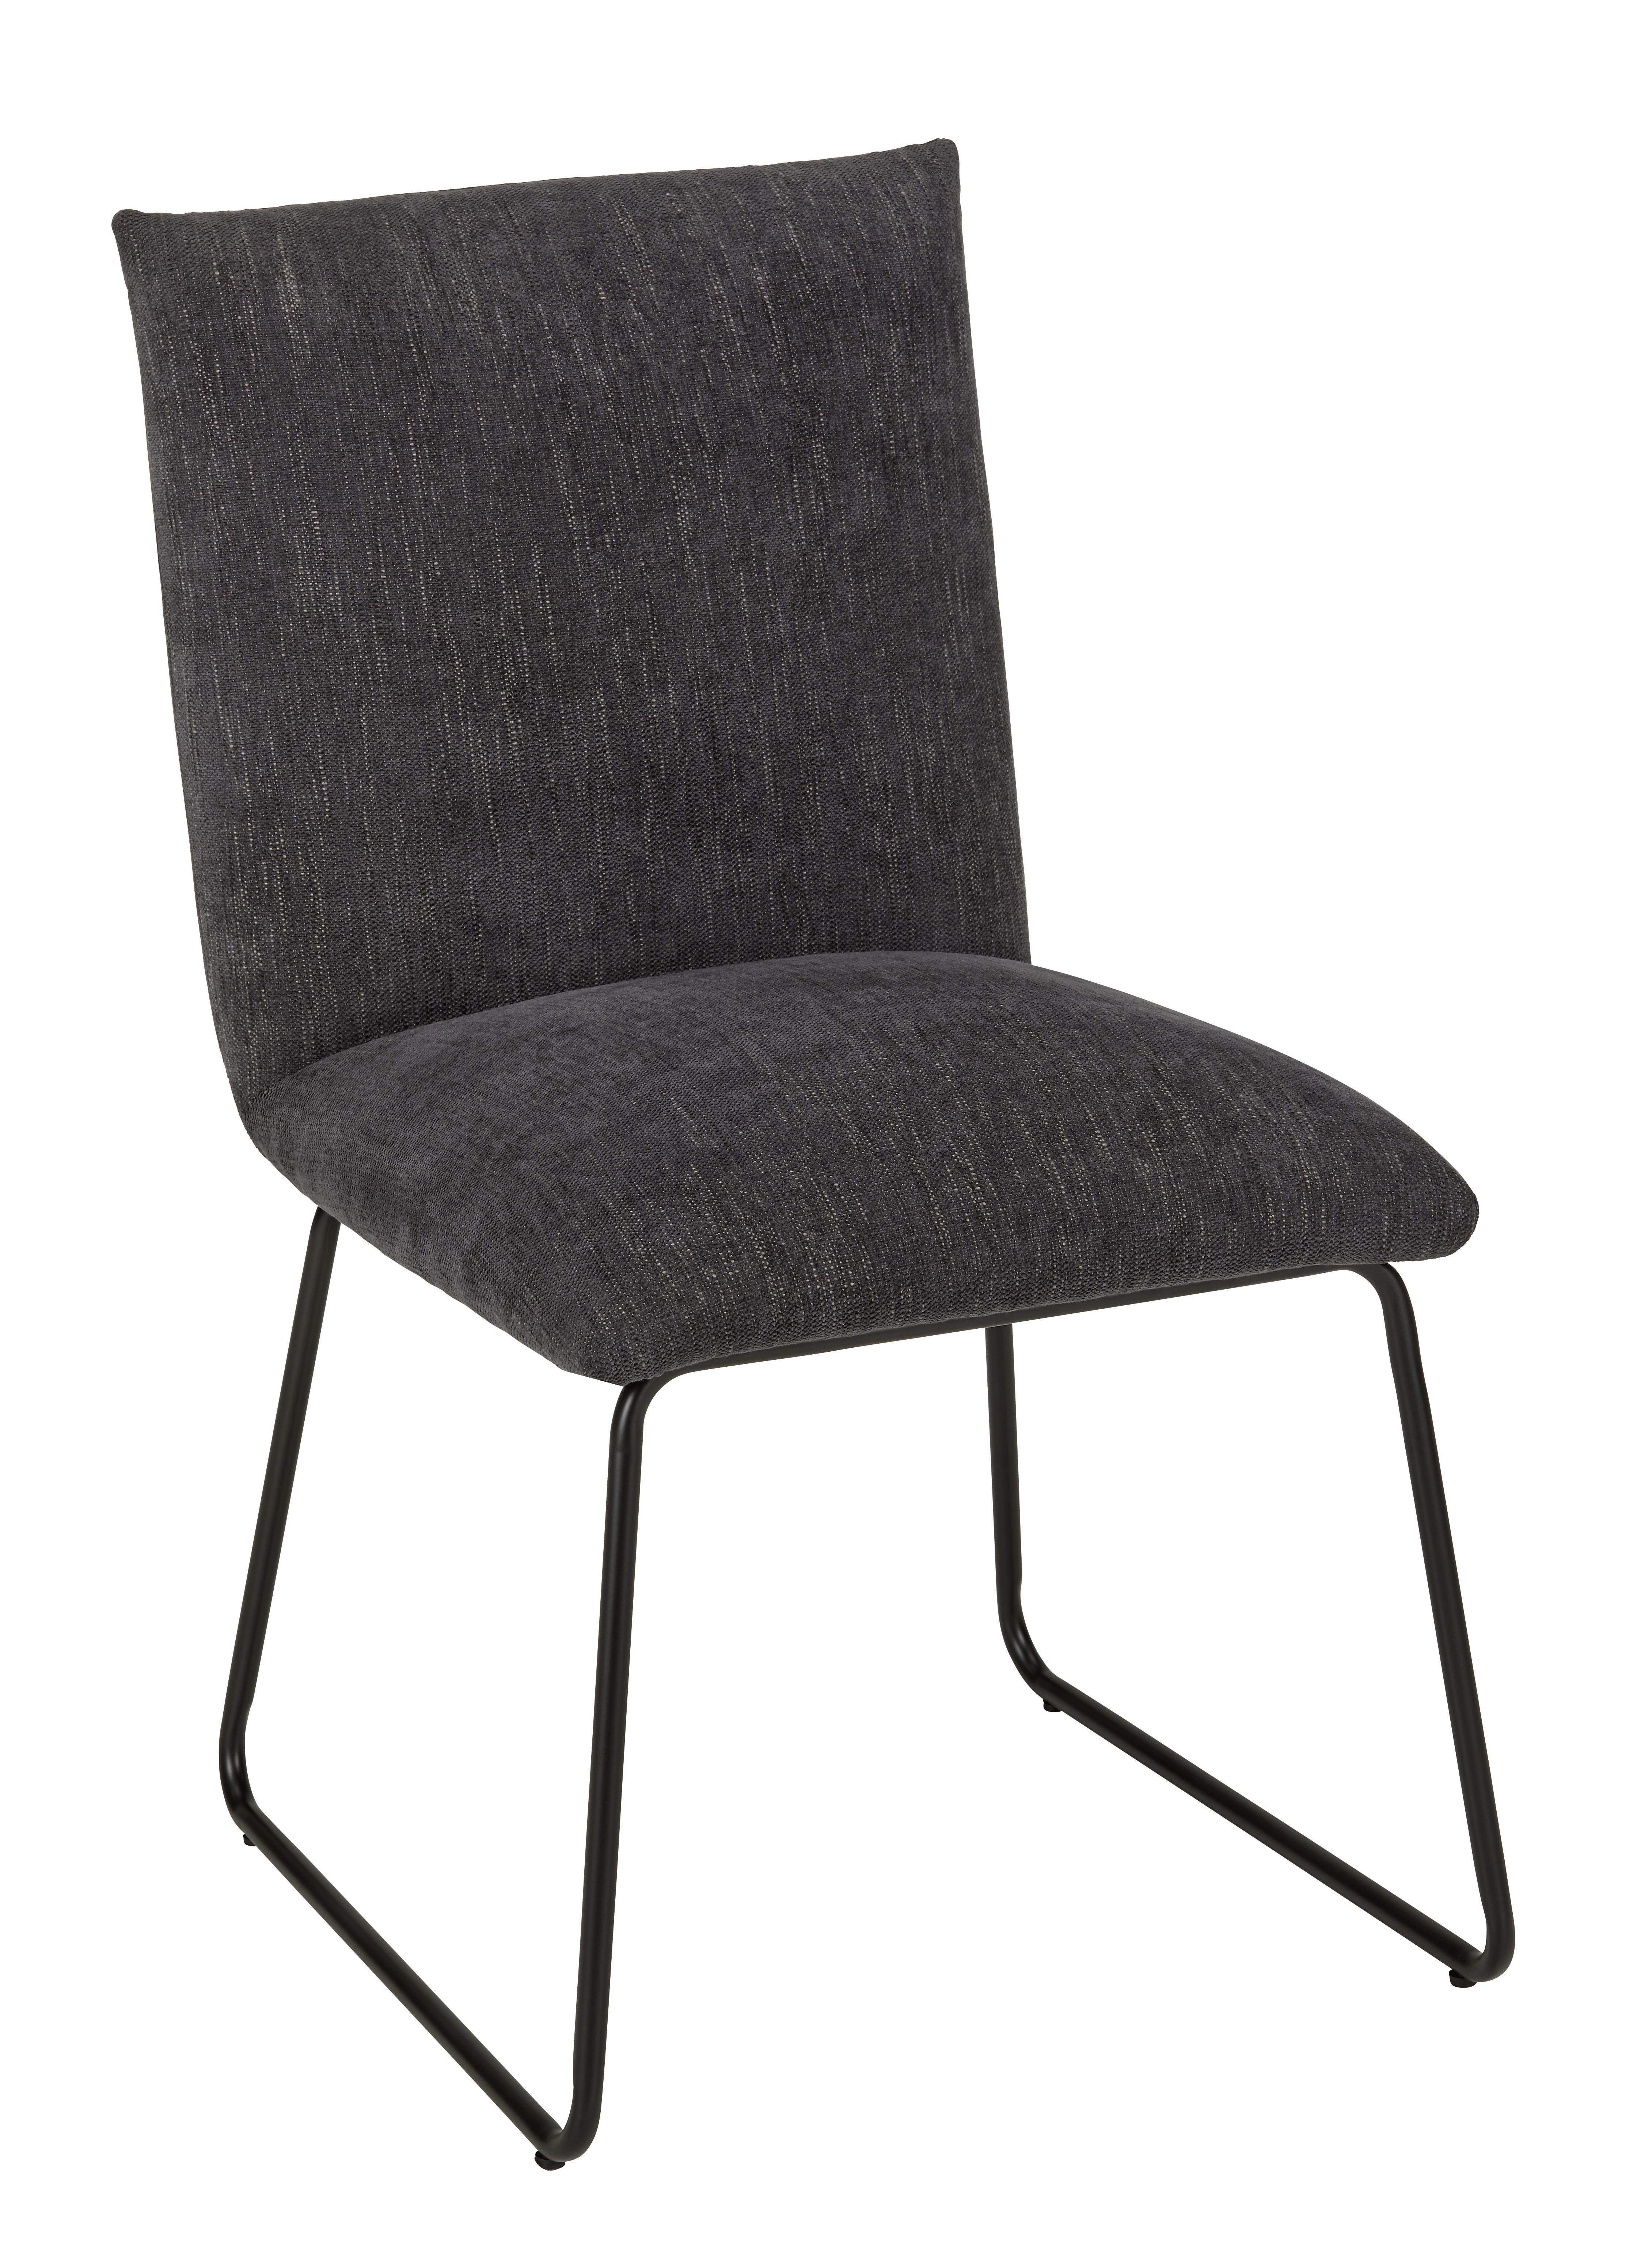 Stuhl in Anthrazit - Anthrazit/Schwarz, MODERN, Textil/Metall (49/85/64cm) - Premium Living